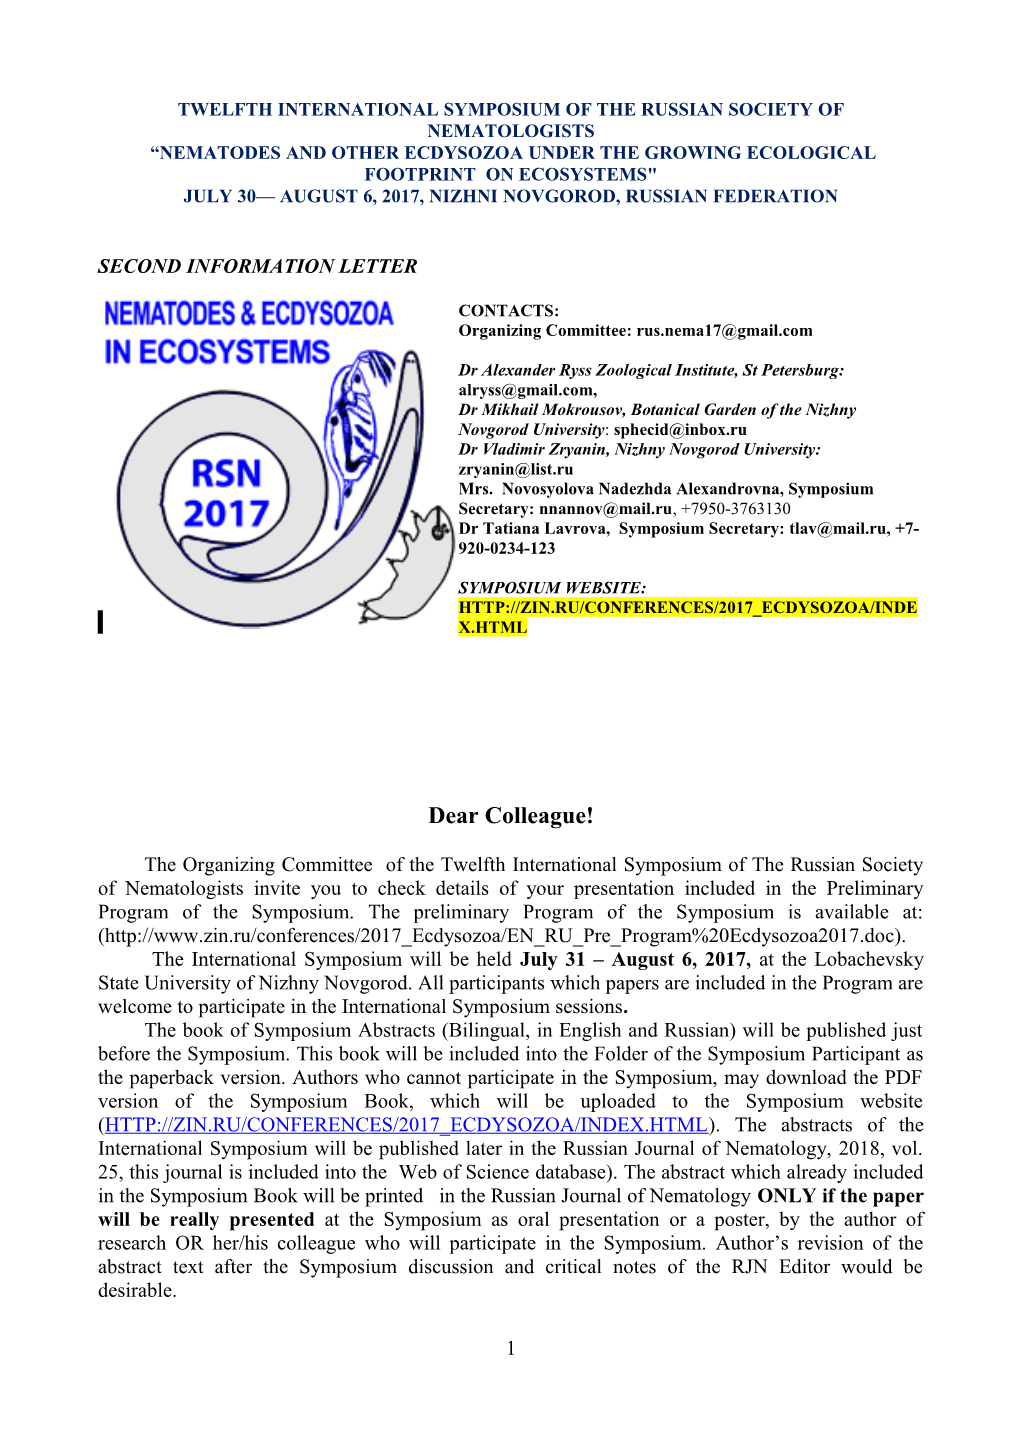 Twelfth International Symposium of the Russian Society of Nematologists